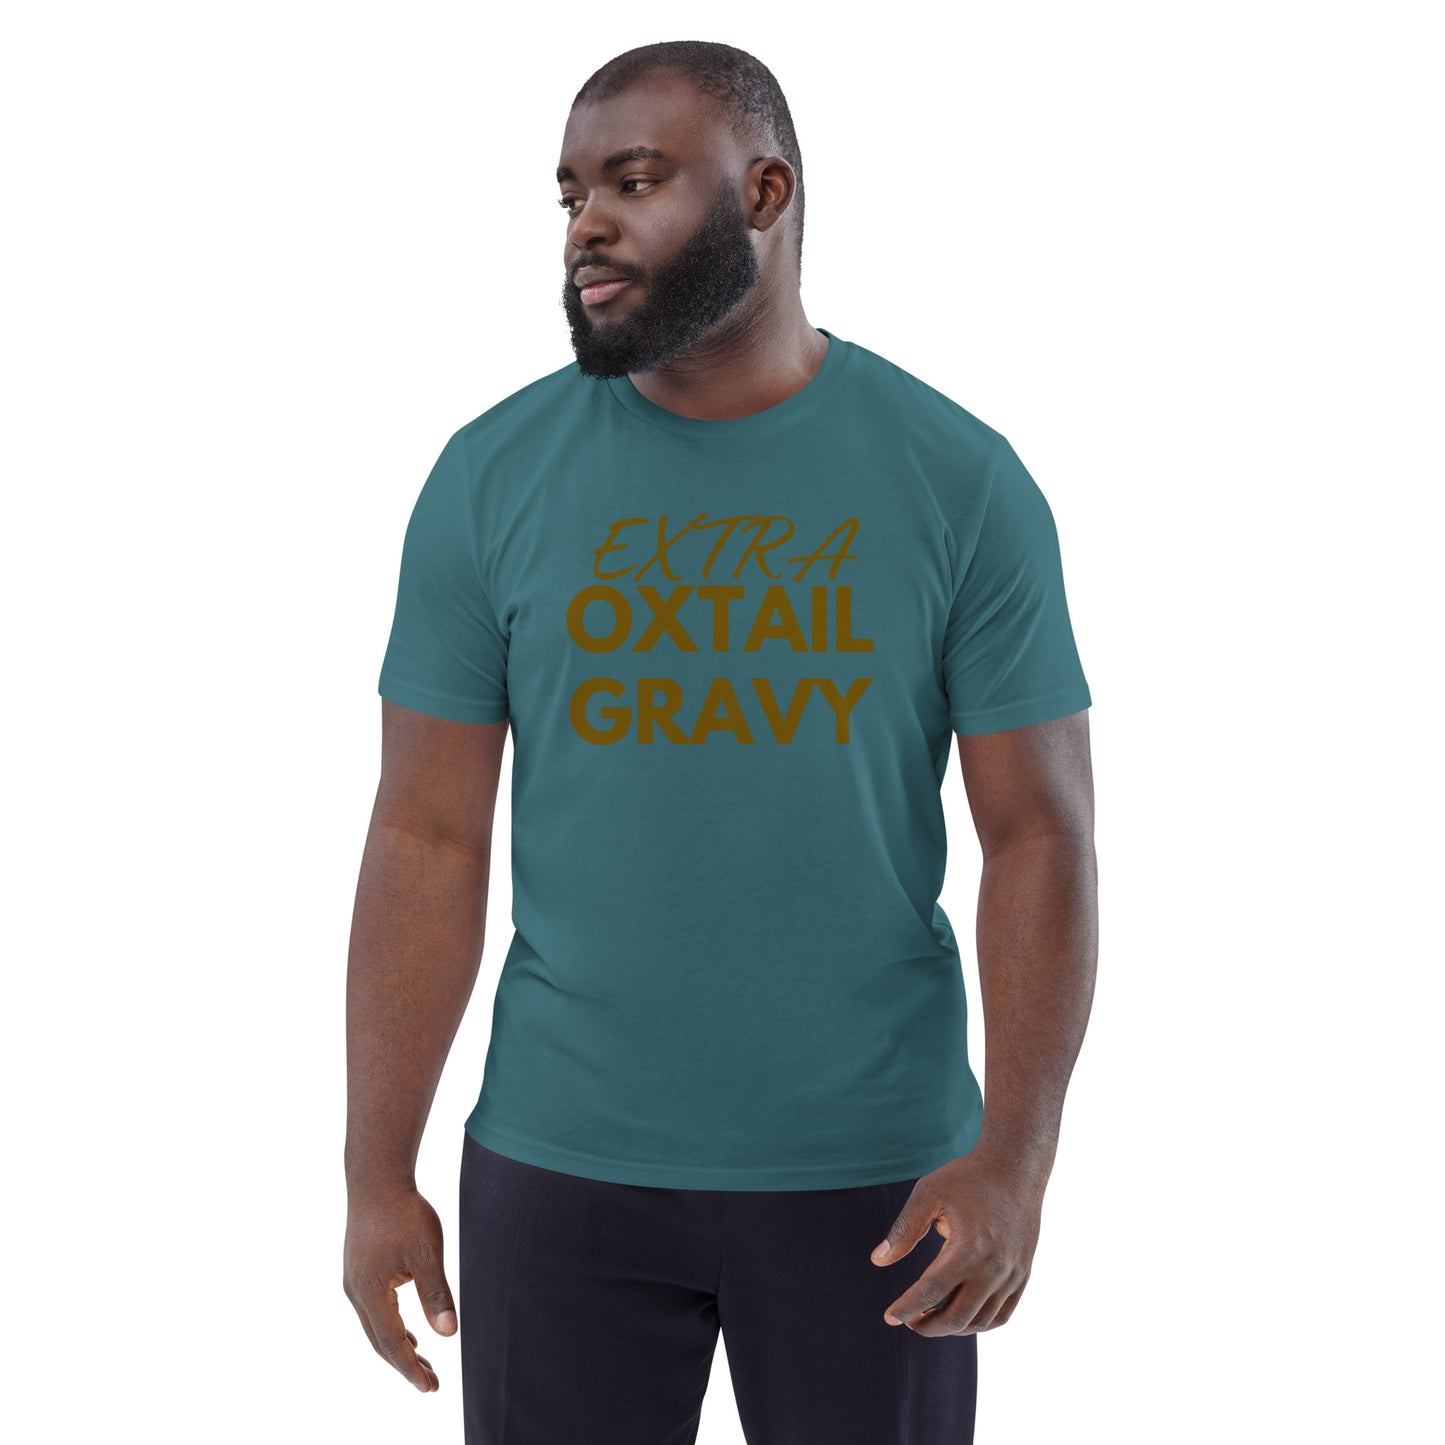 "Extra Oxtail Gravy" Men's T-Shirt